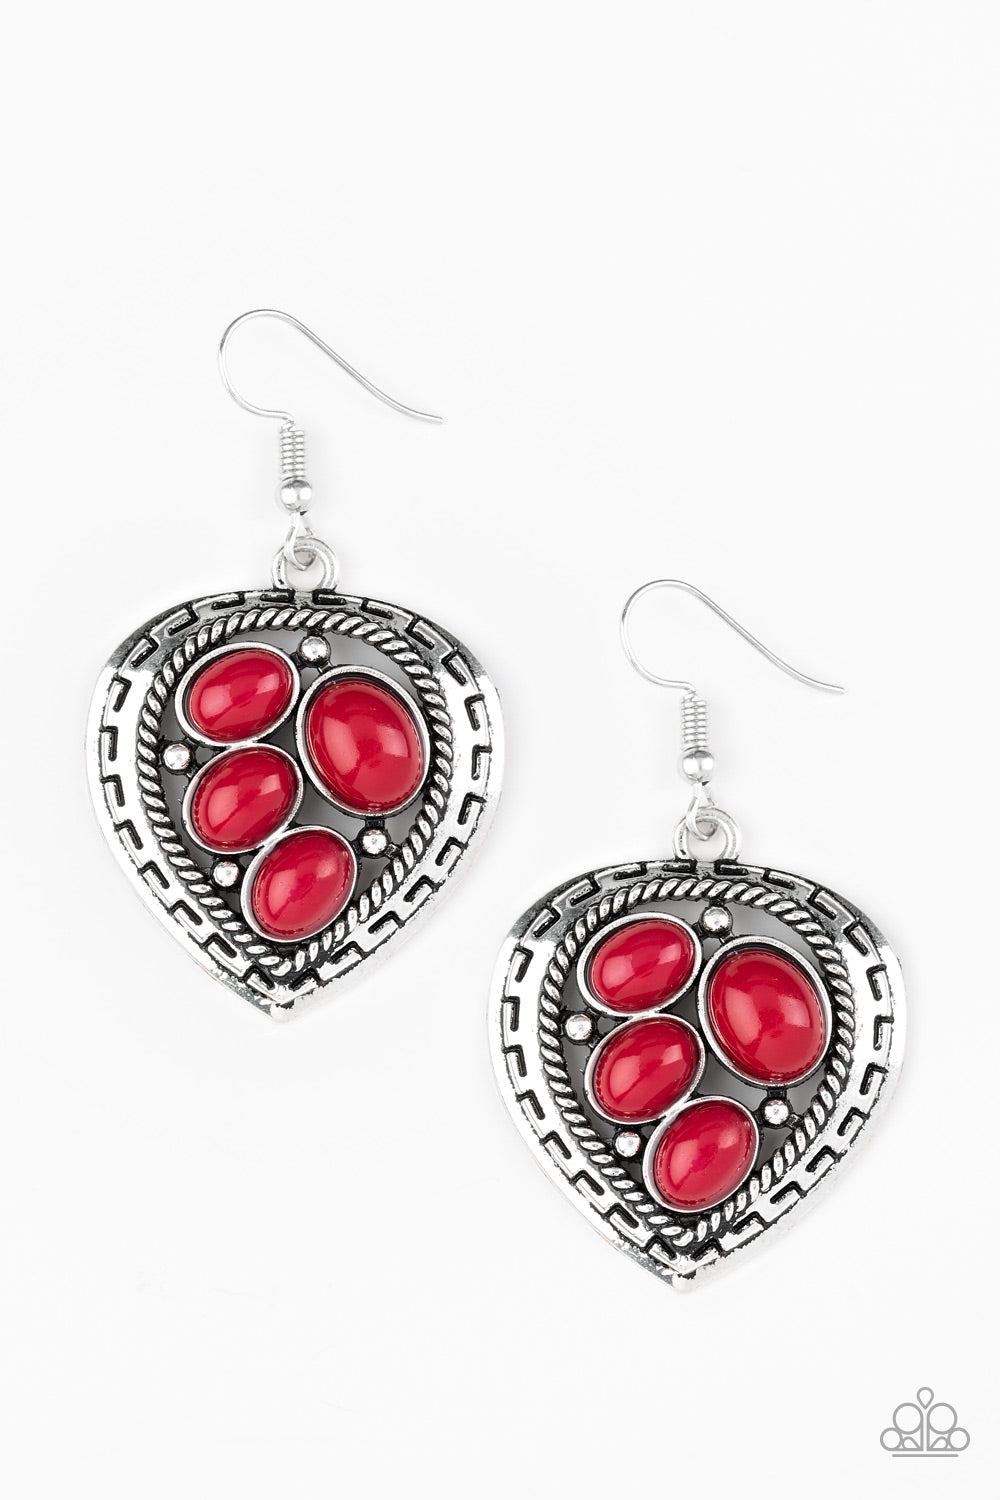 Paparazzi Accessories - Wild Heart Wonder - Red Earrings - Alies Bling Bar